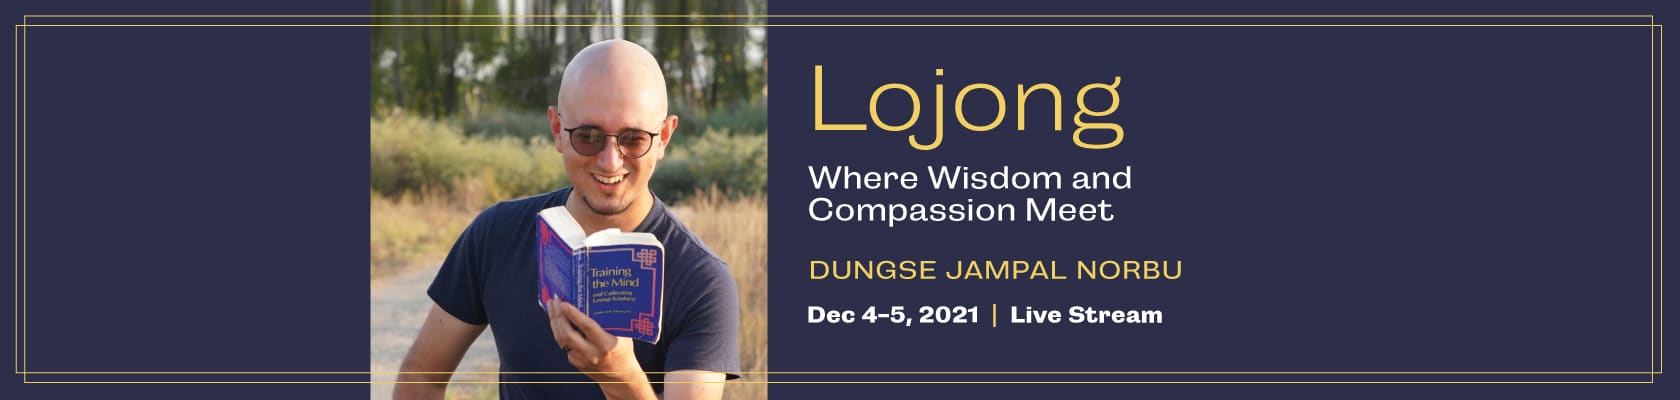 lojong and compassion meet header